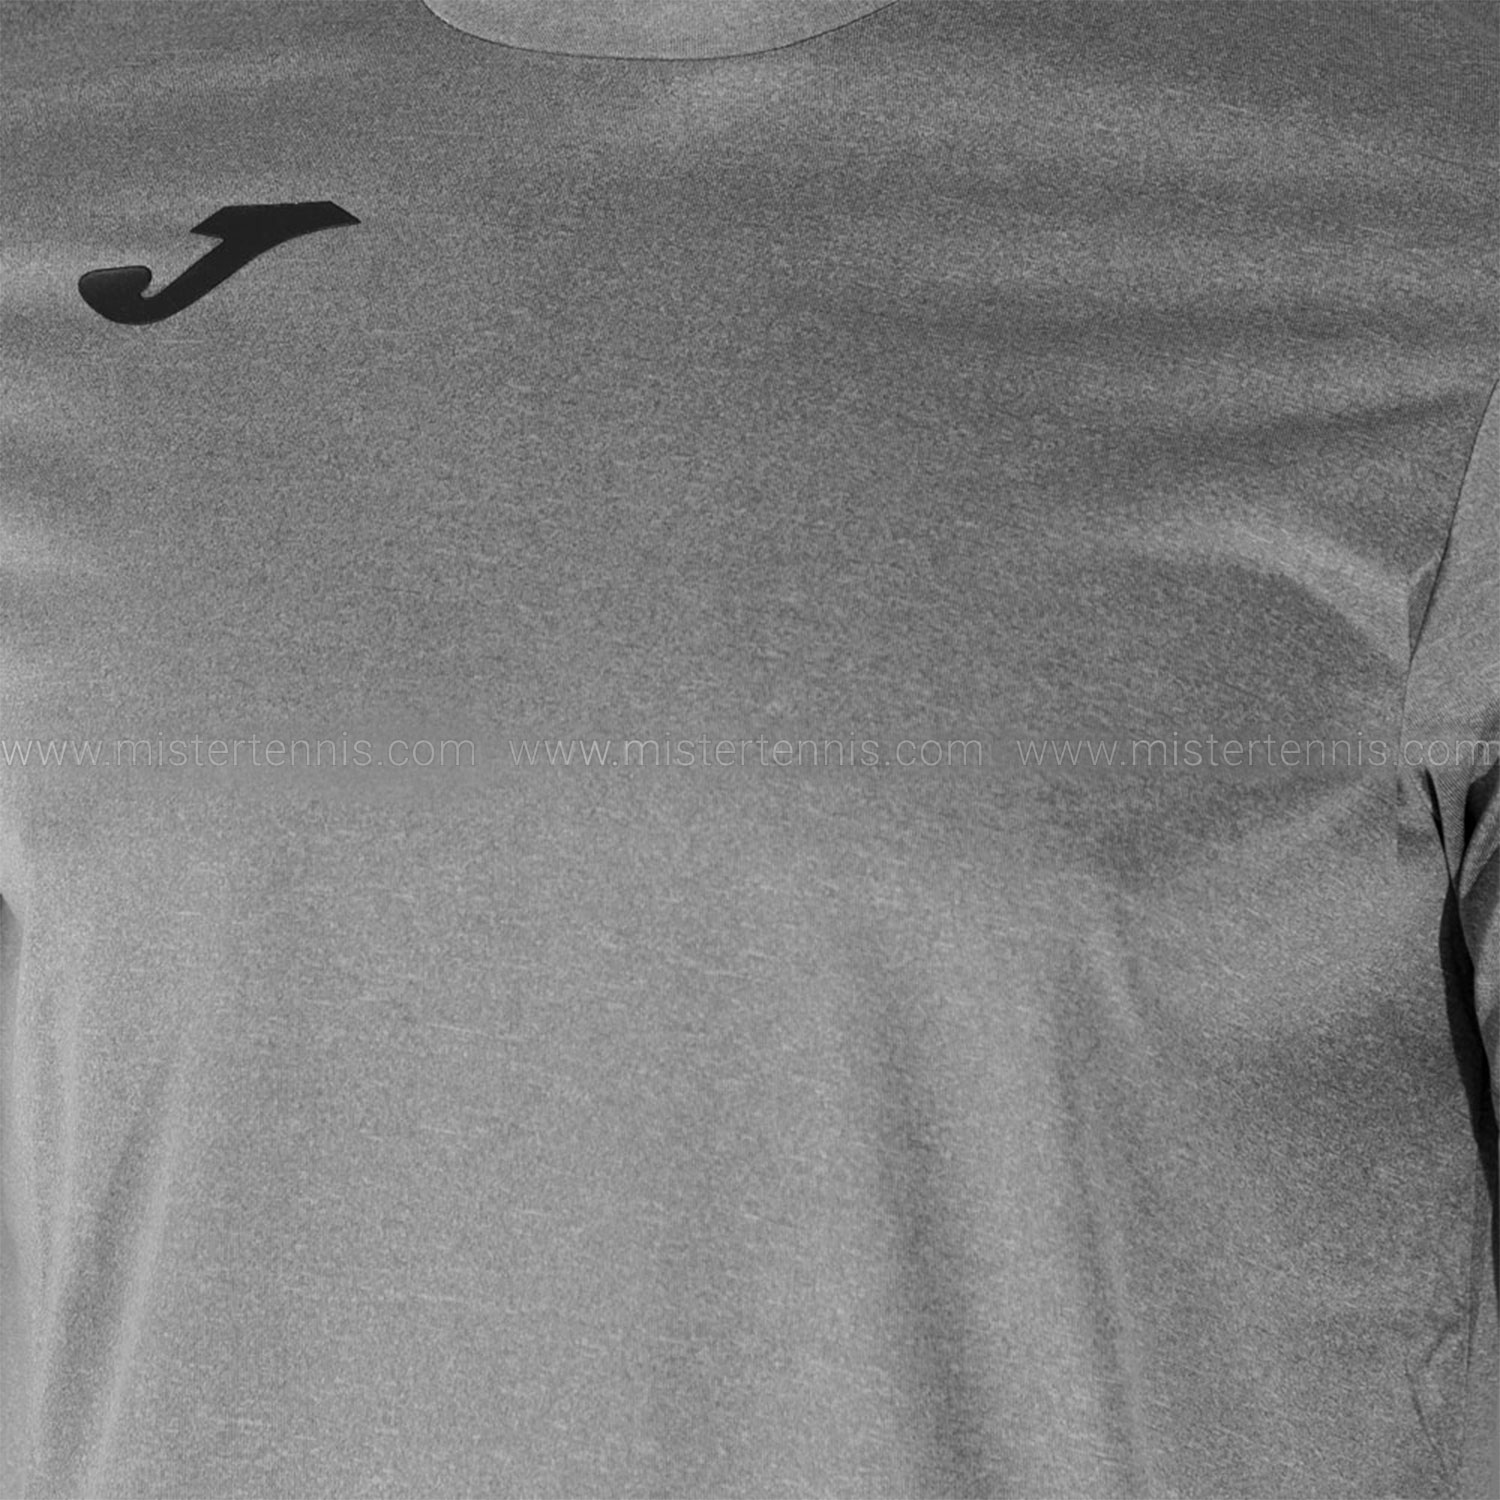 Joma Combi T-Shirt Boy - Light Grey Melange